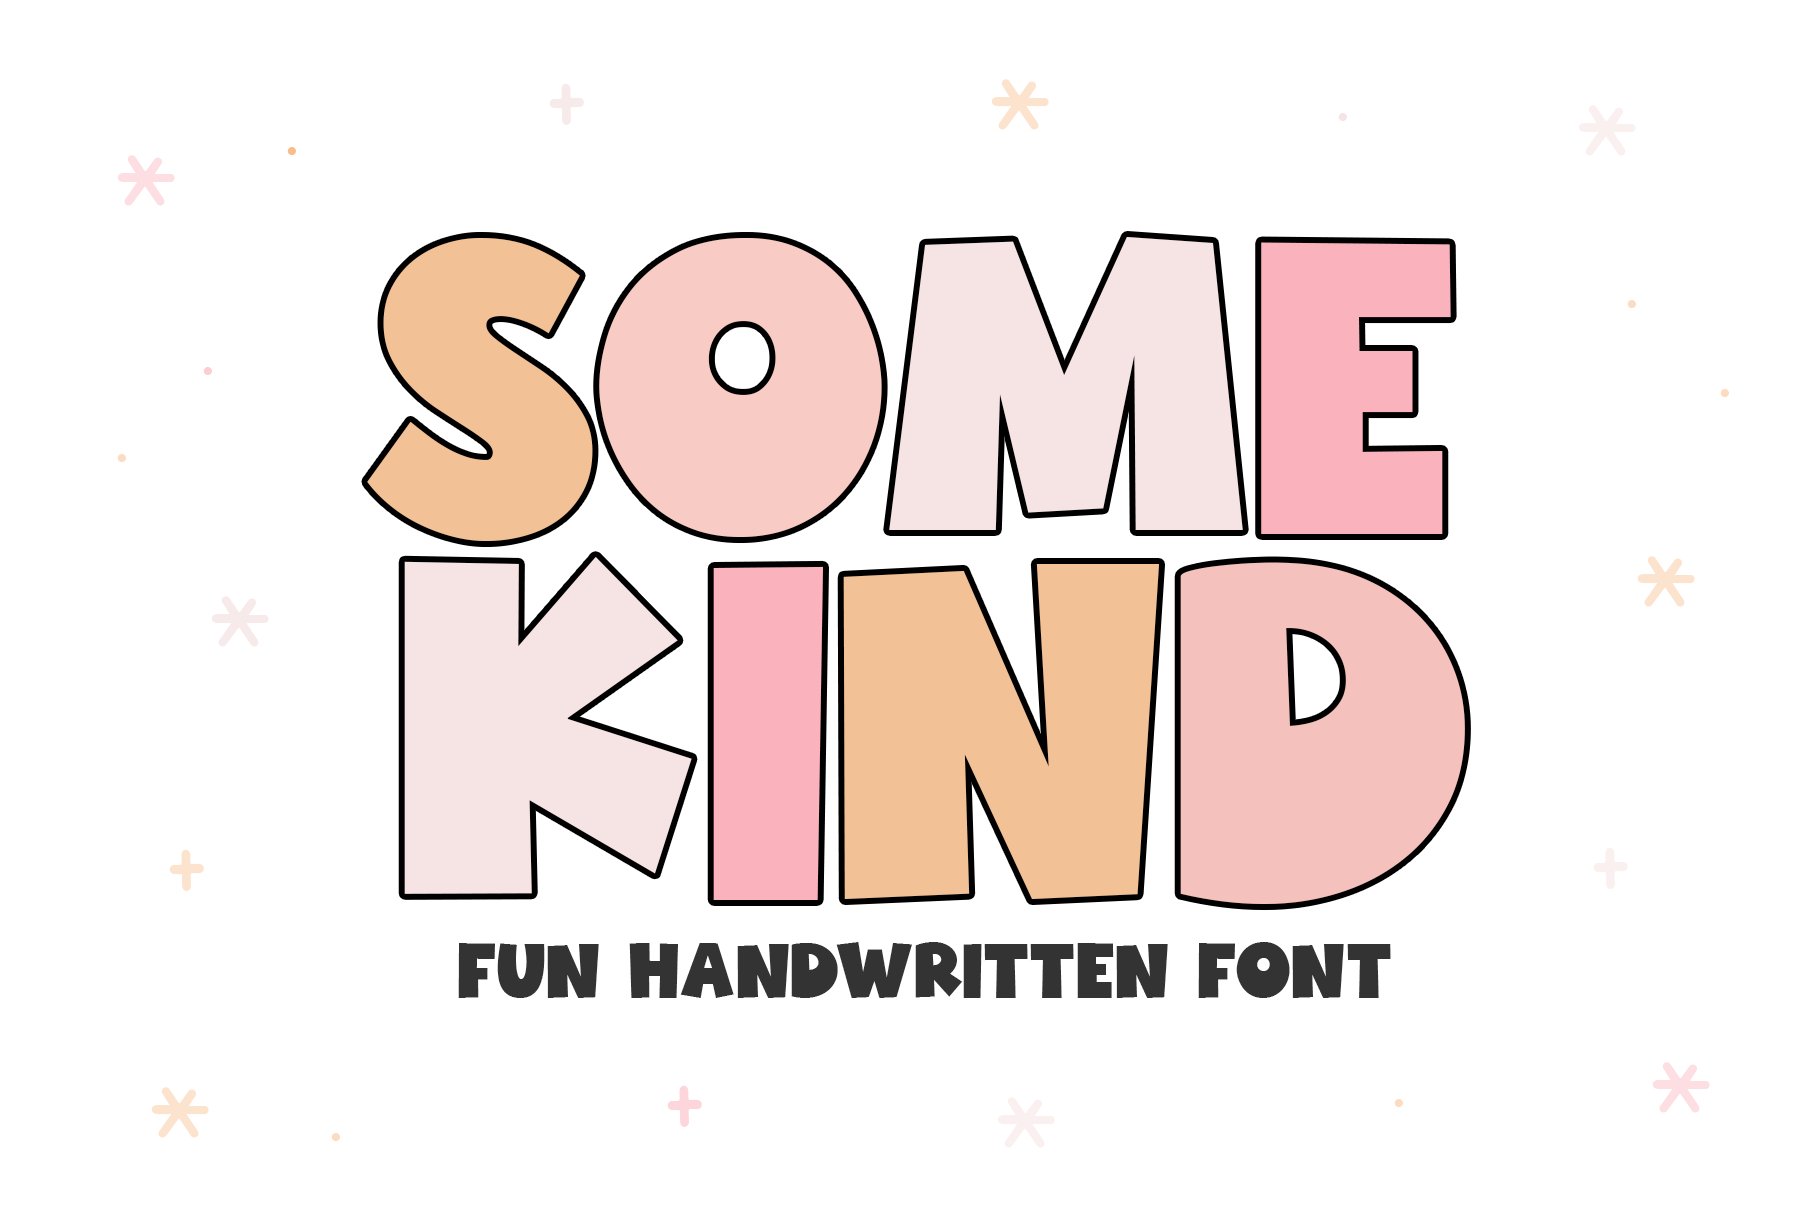 Somekind | Fun Handwritten Font cover image.